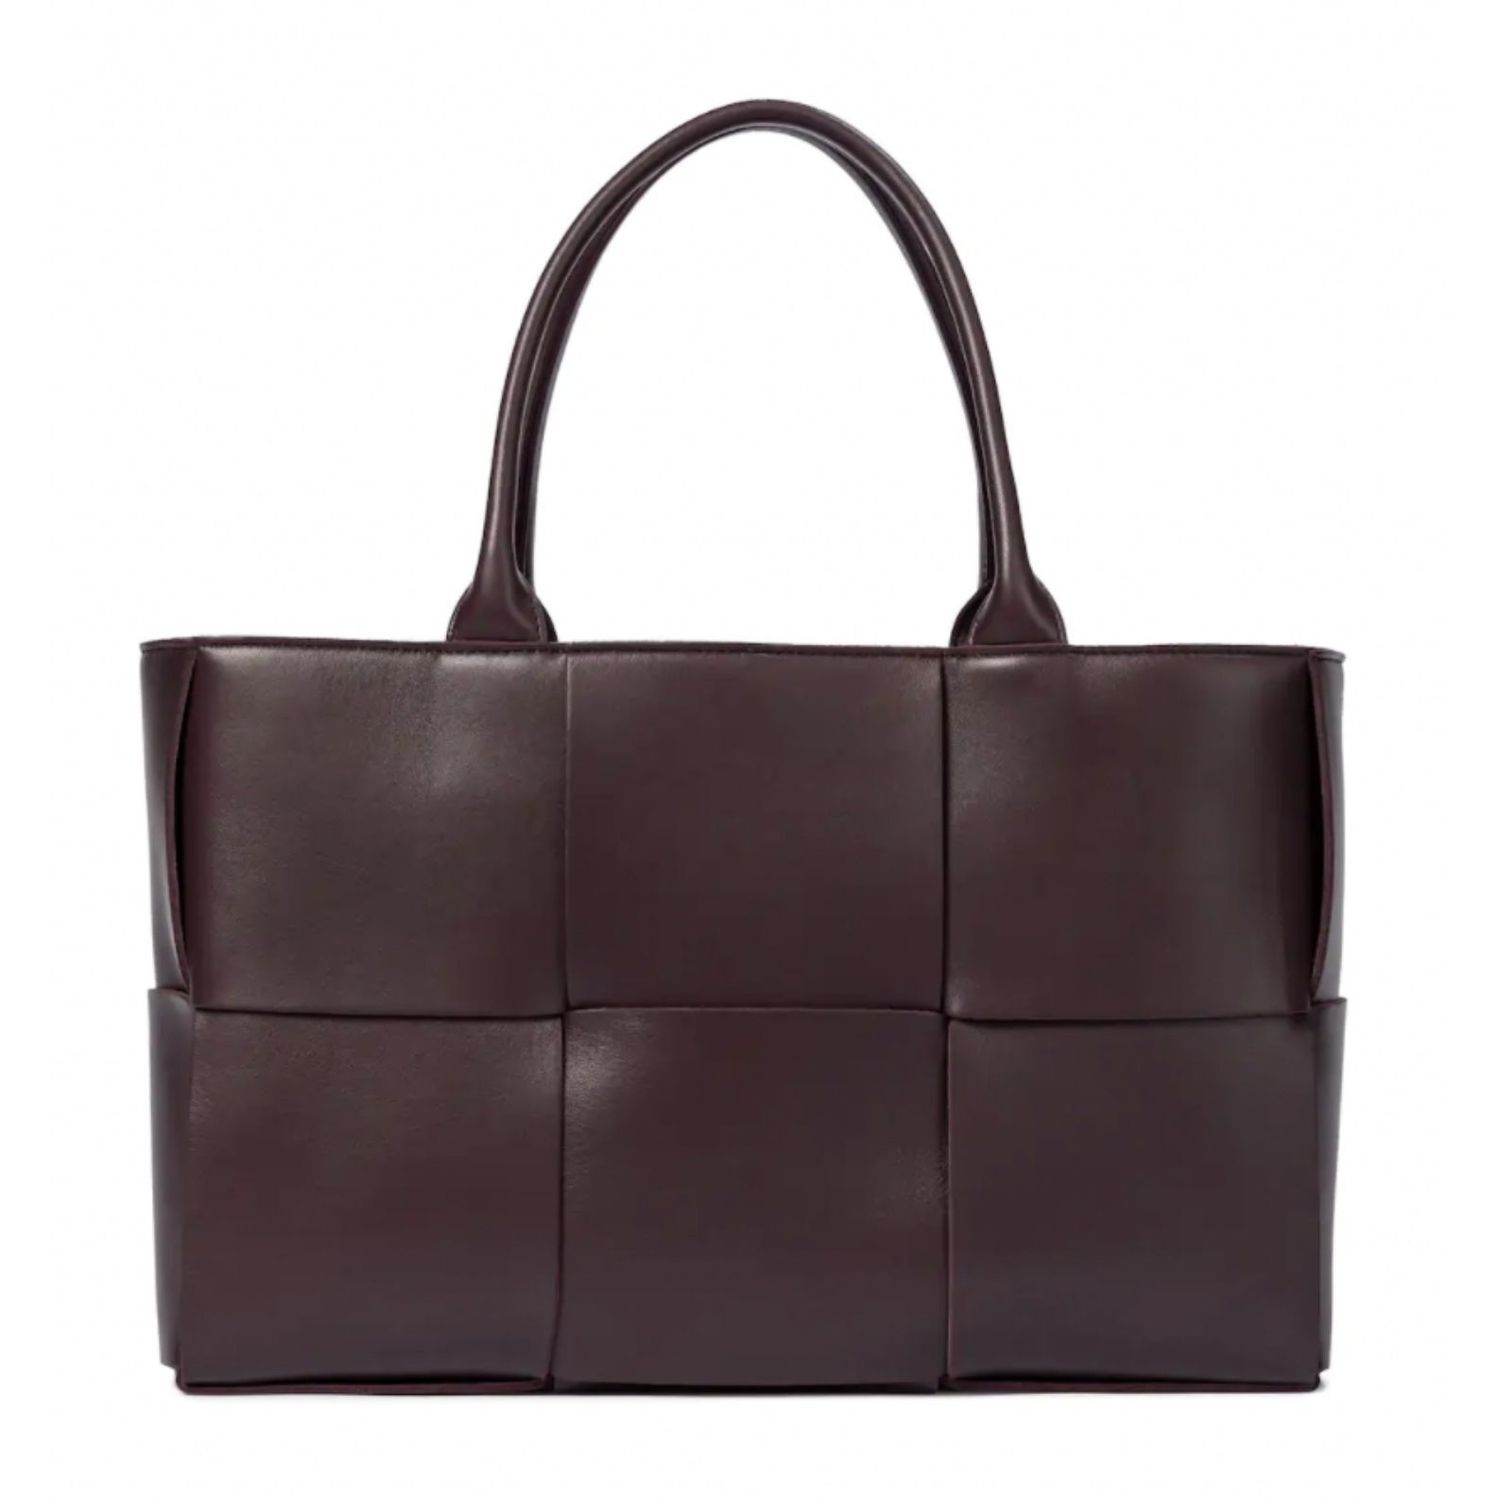 Bottega Veneta Arco Small leather shoulder bag